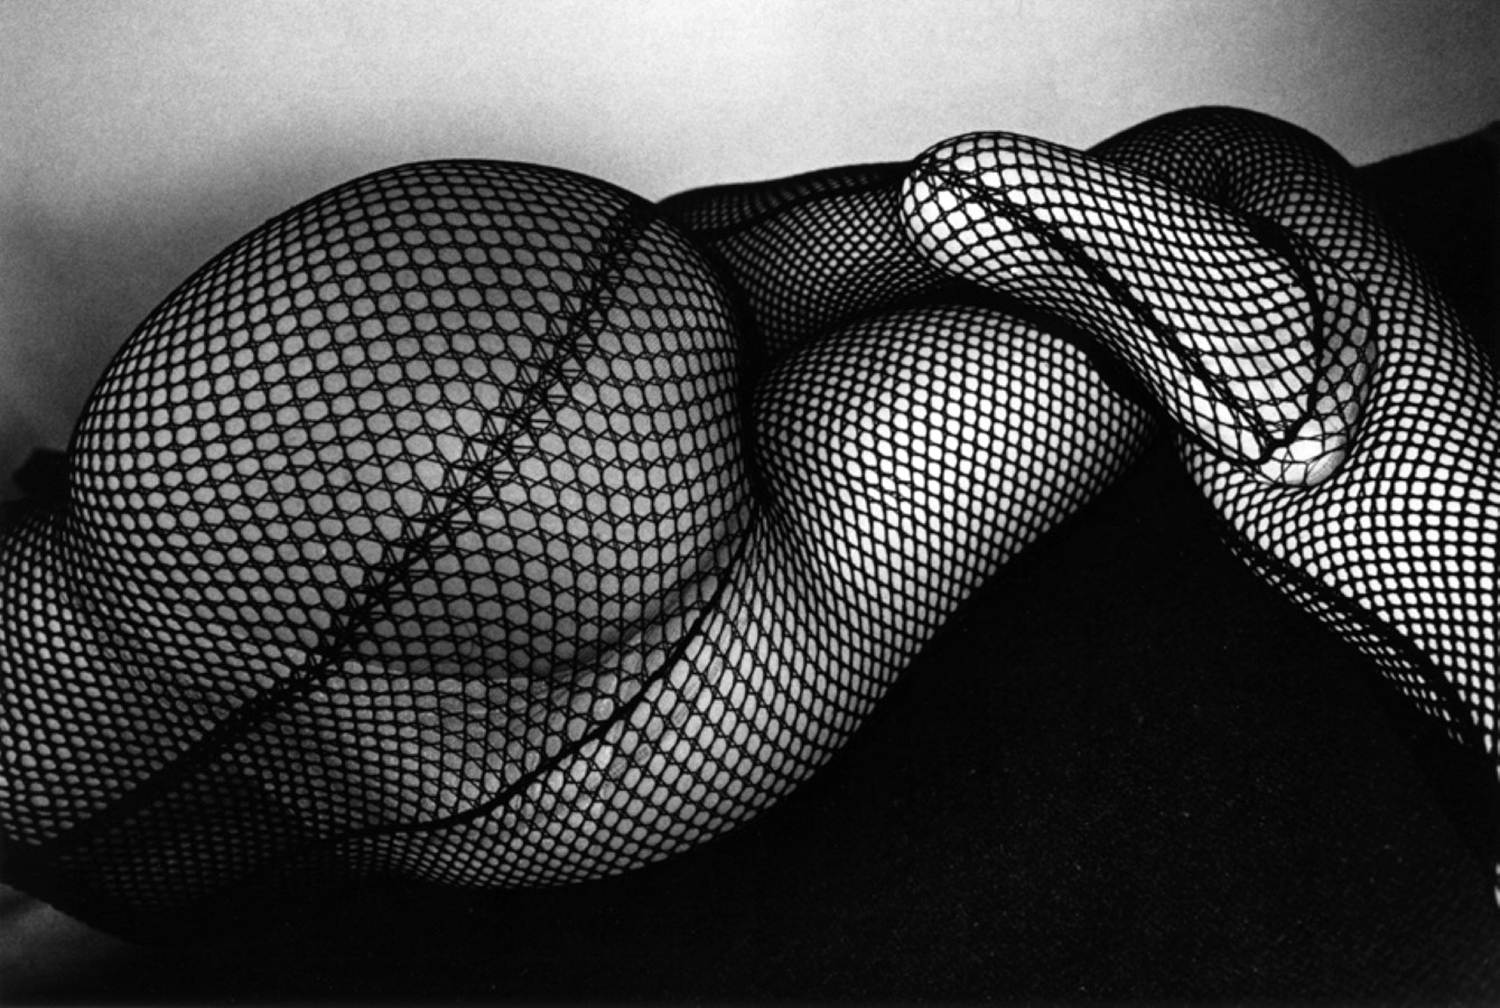 Erotic photographers, Daido Moriyama - fishnets